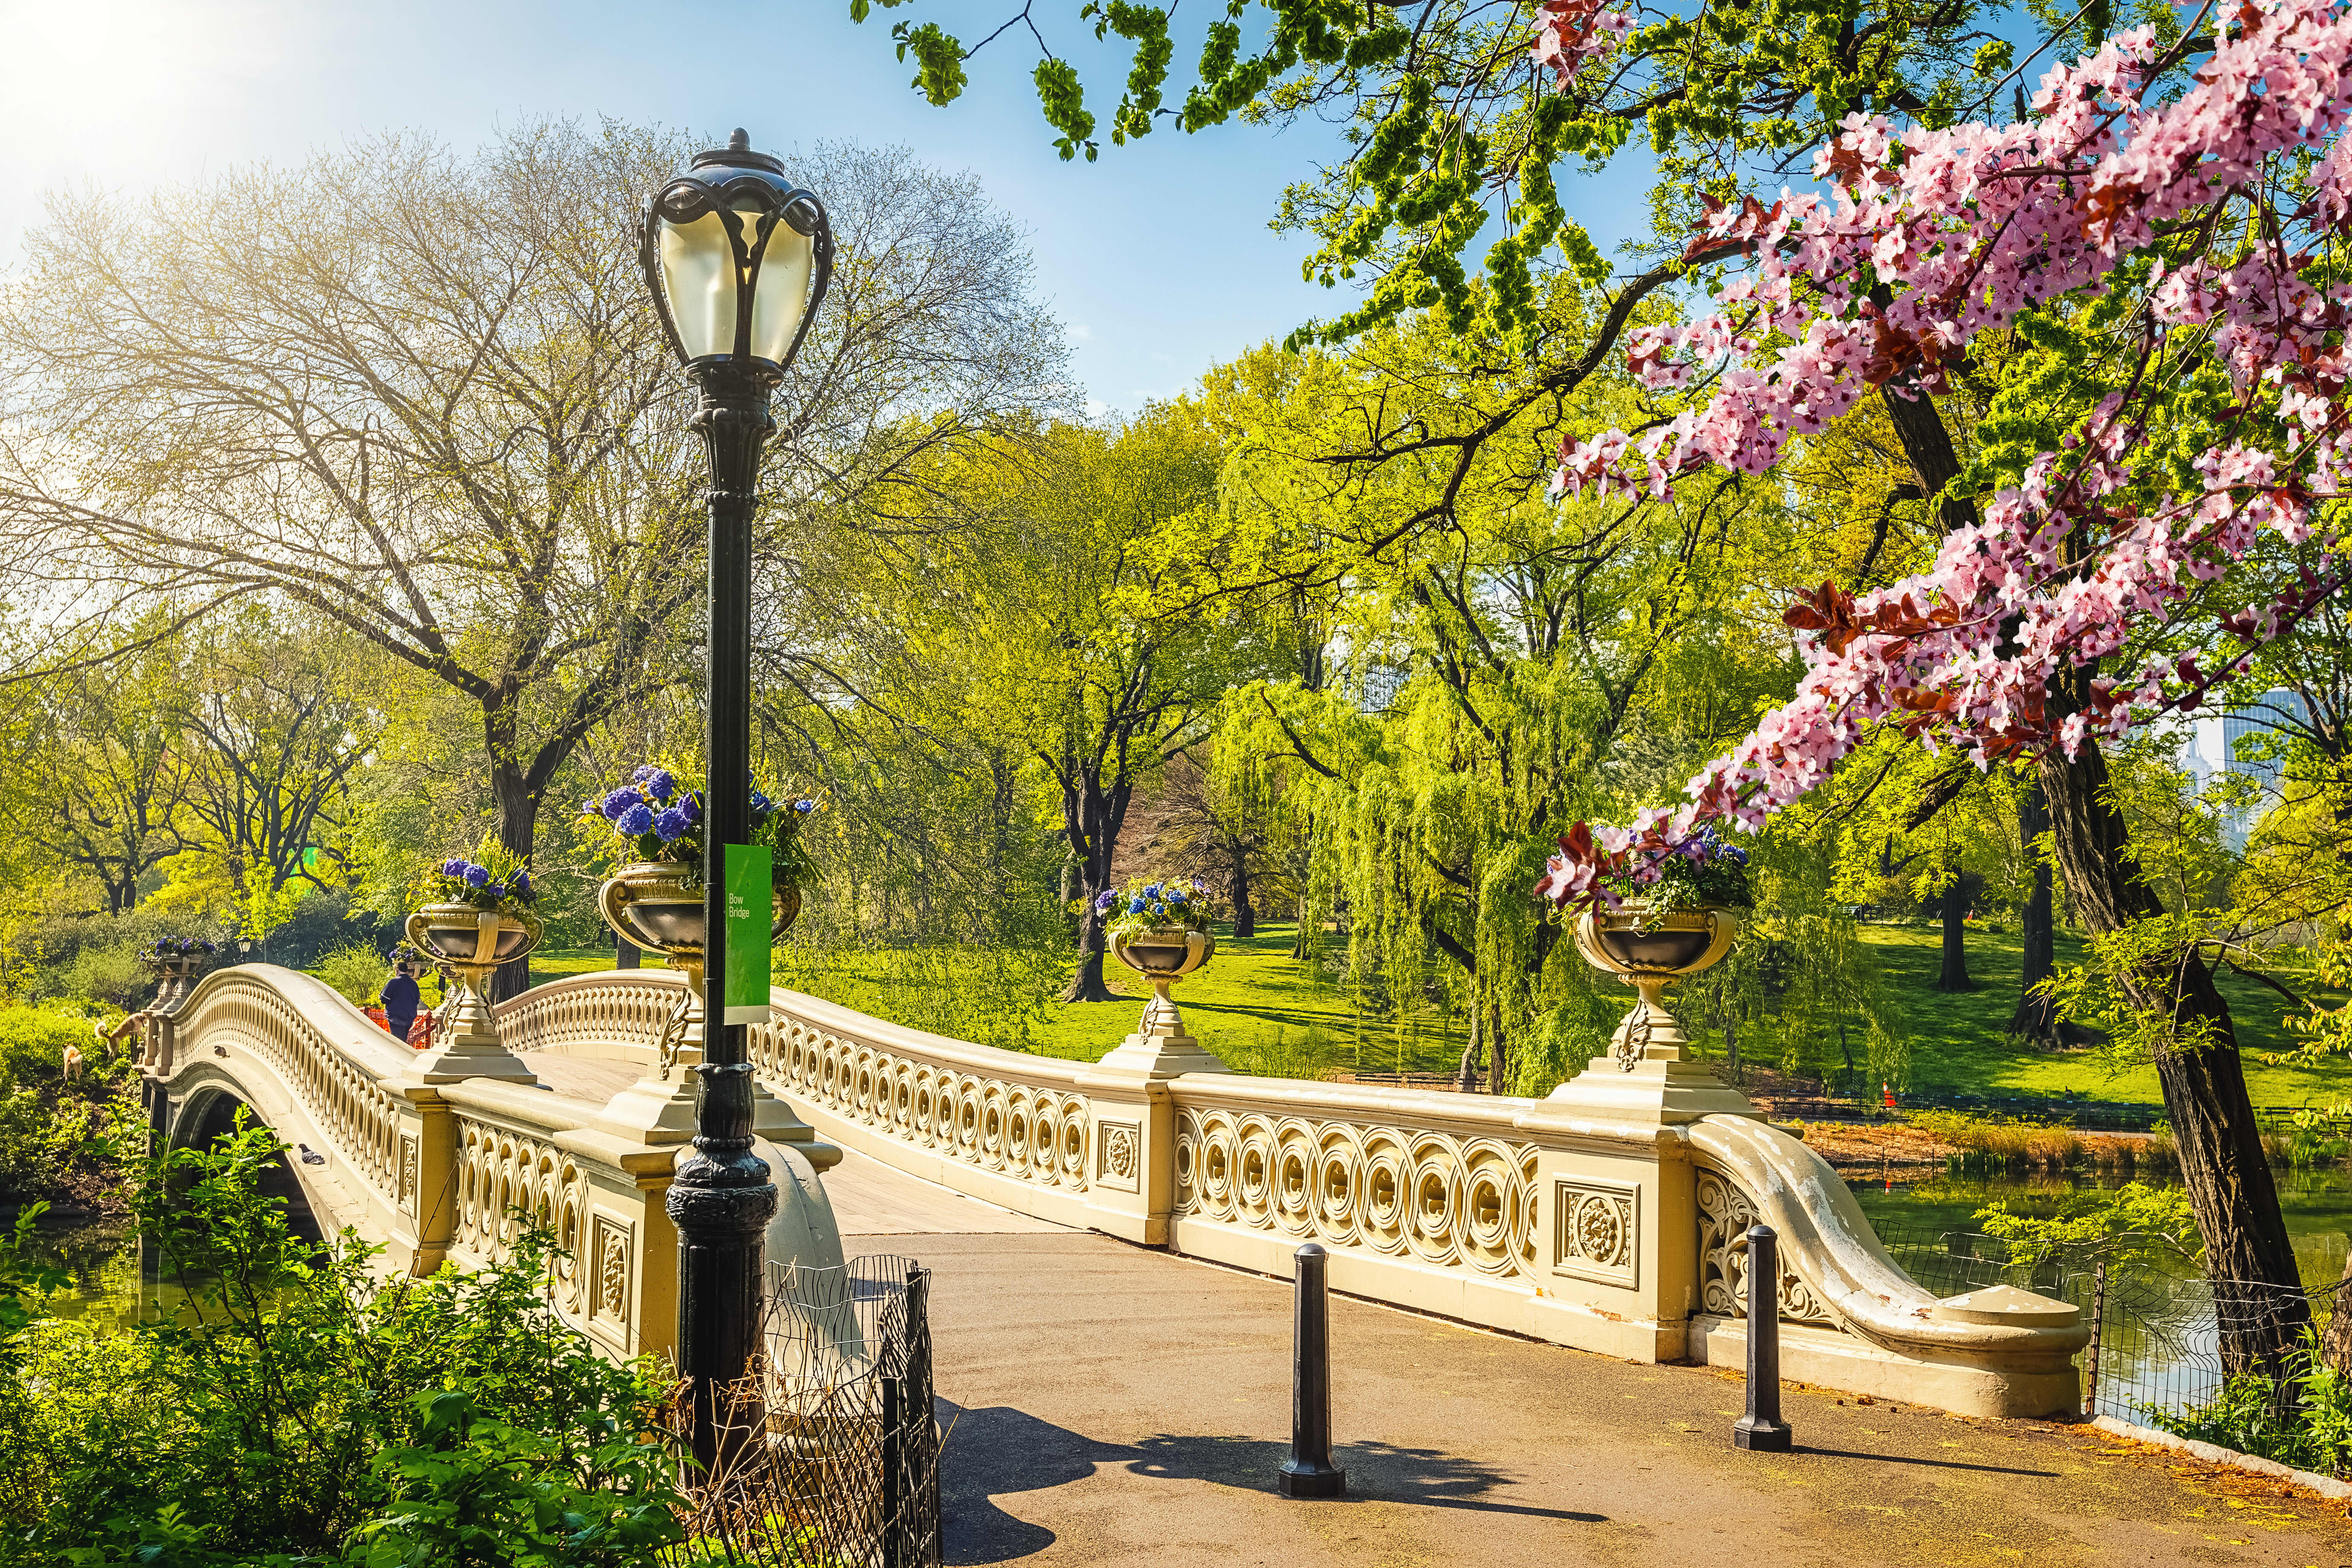 This Park Near NYC Has More Cherry Blossom Trees Than Washington